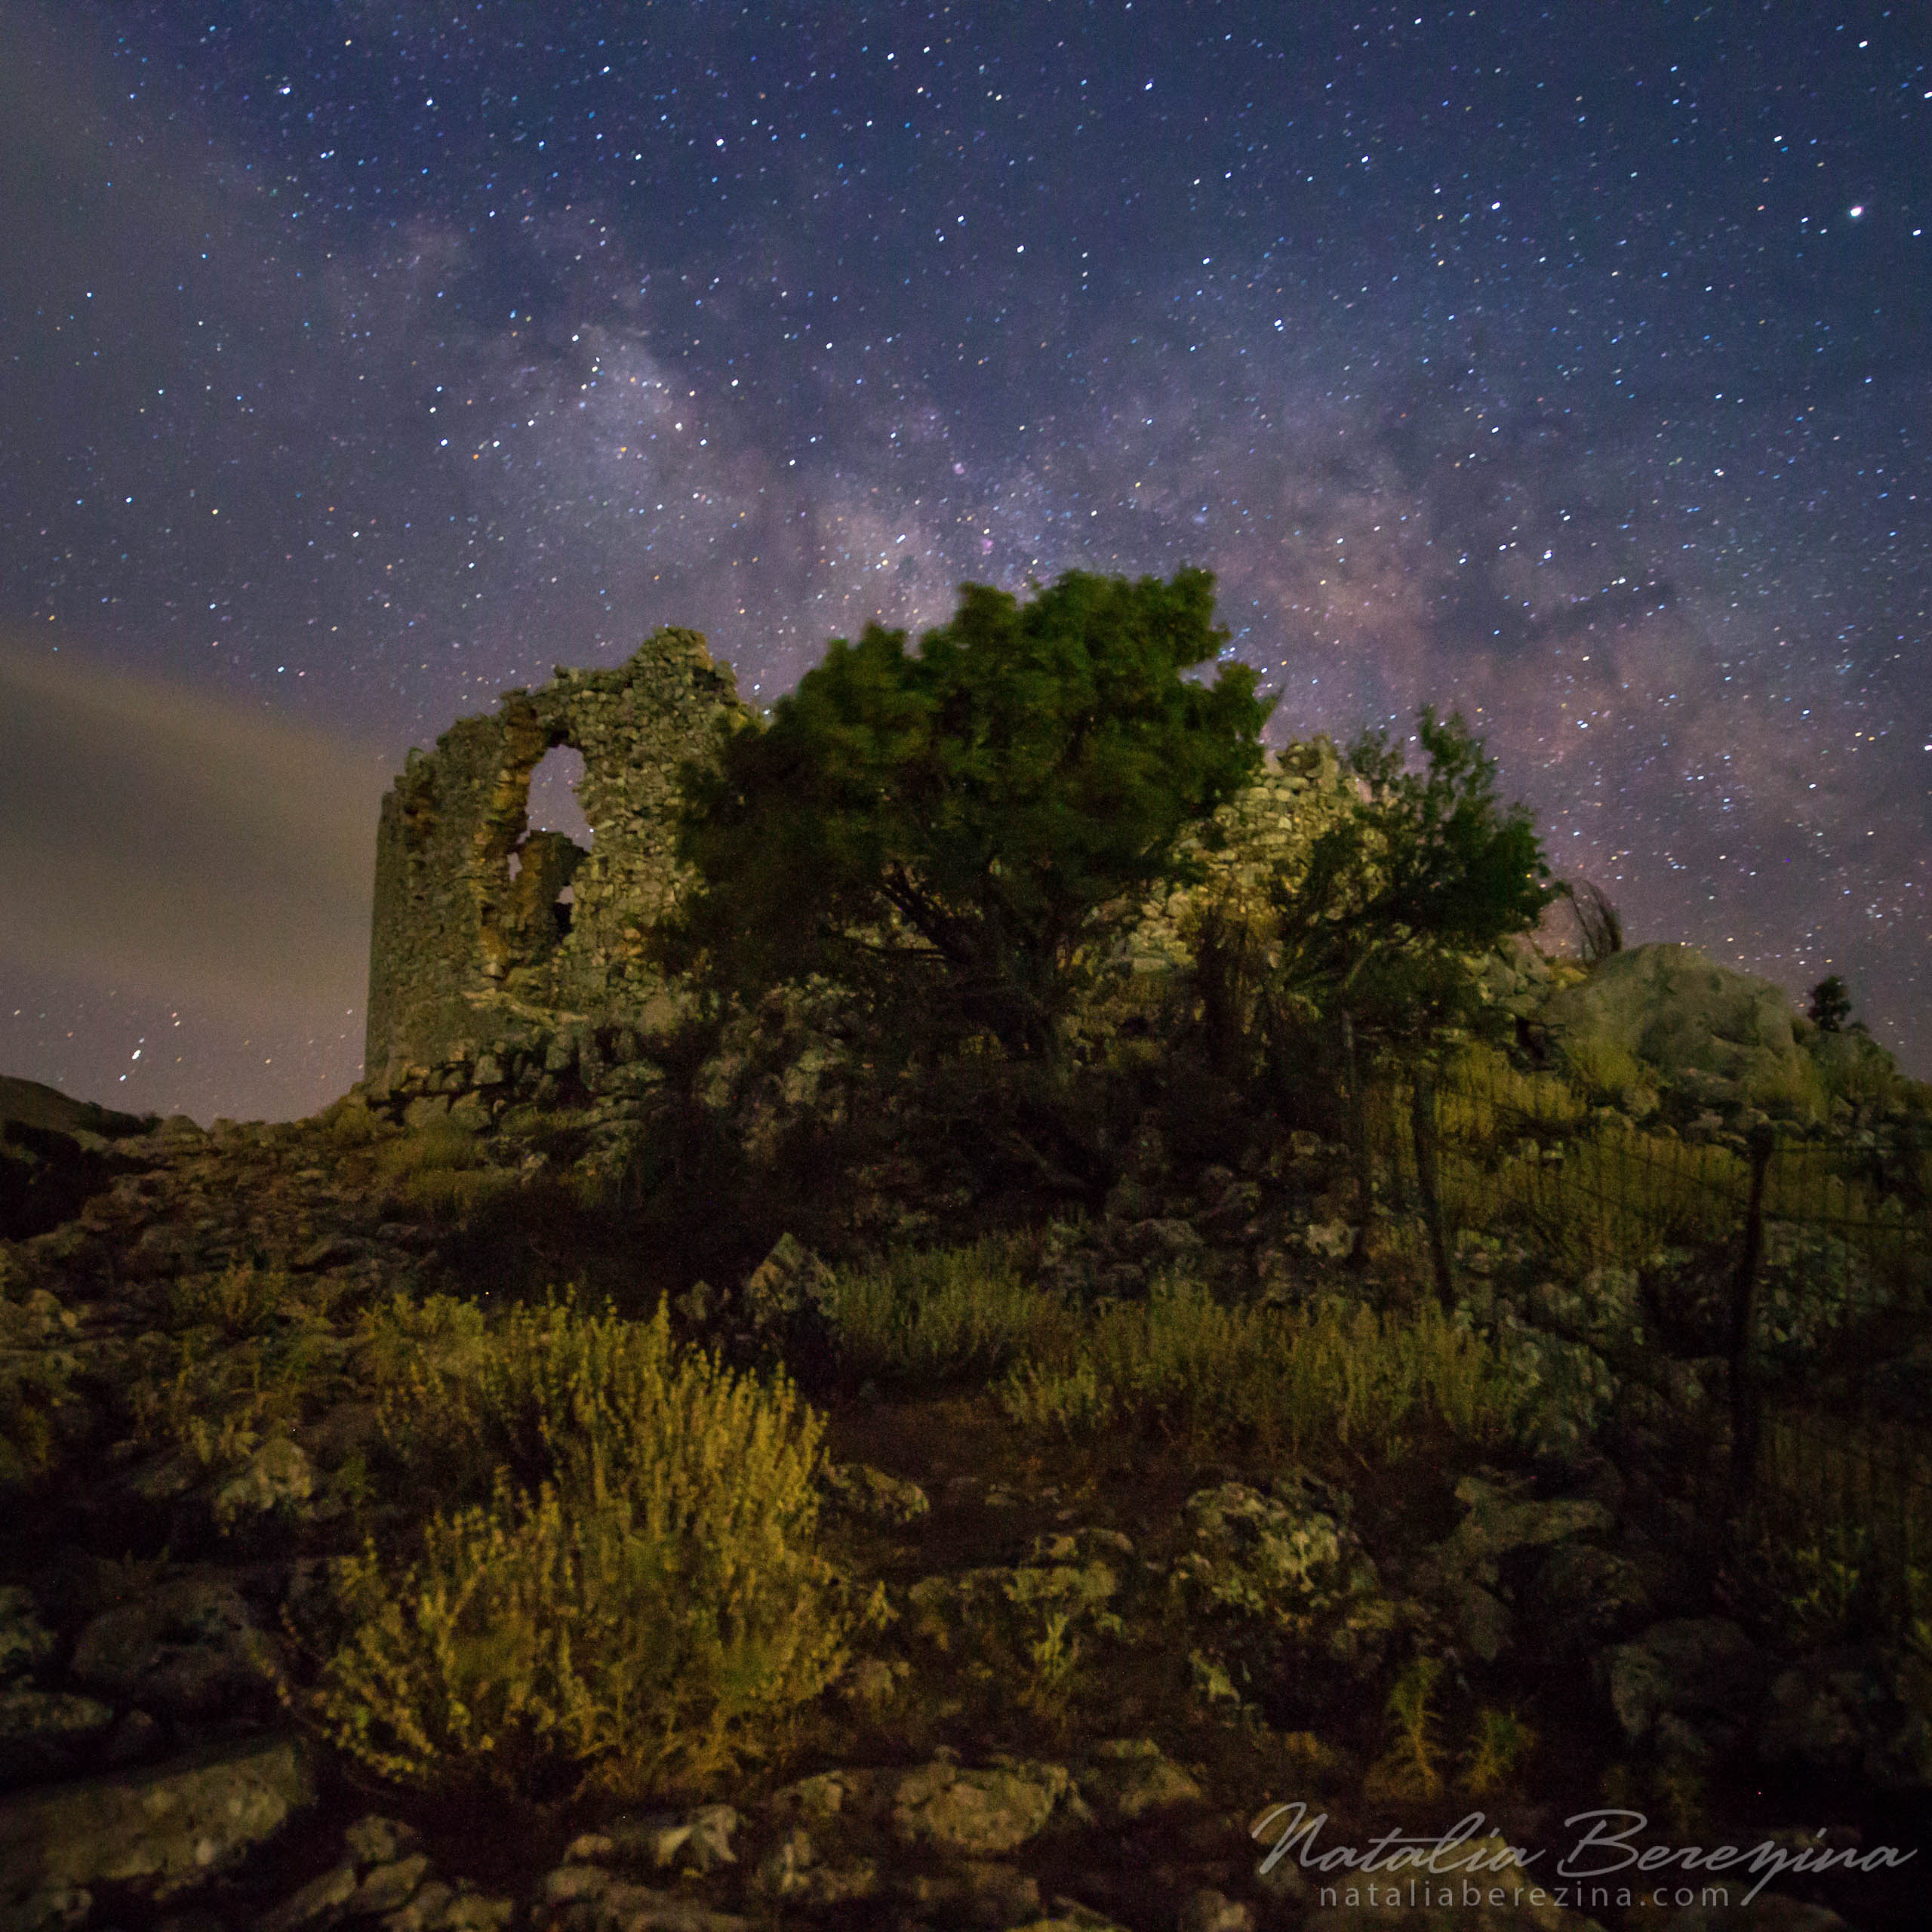 Greece, Crete, night time, star sky, Milky Way, ruin, 1x1 CR1-NBDK1U9693 - Crete, Greece - Natalia Berezina Photography